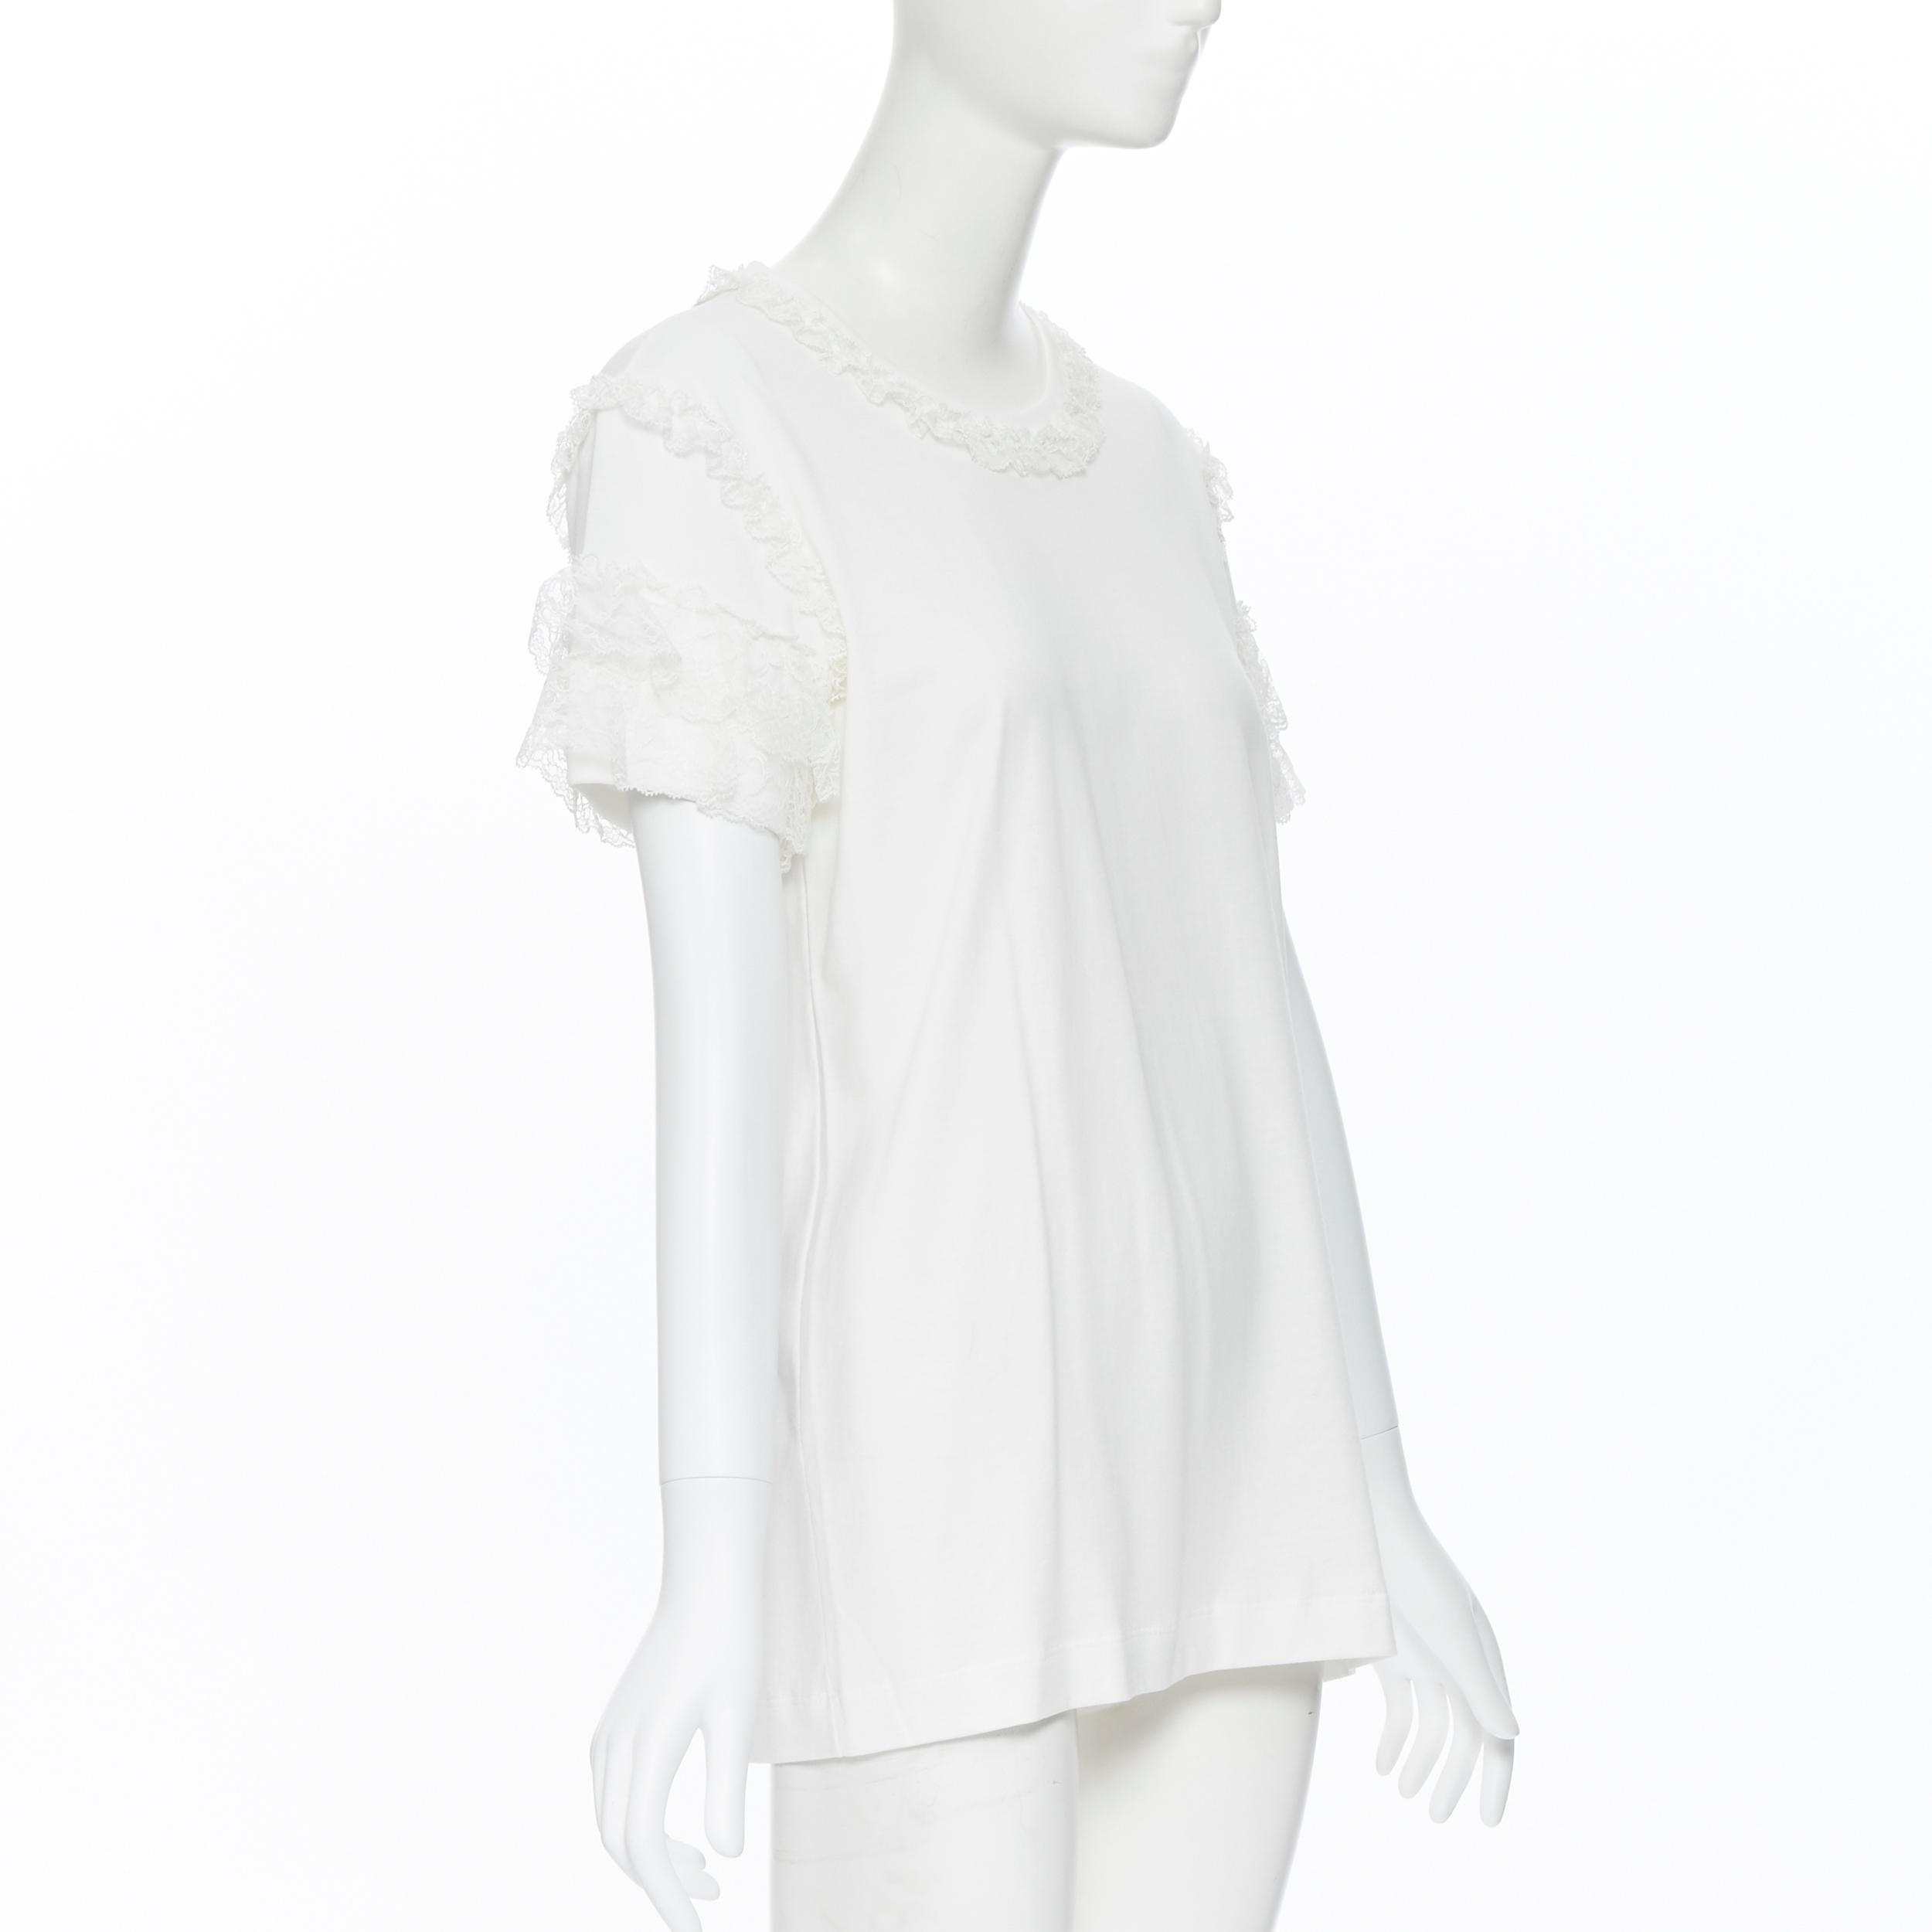 Women's DOLCE GABBANA white cotton floral lace ruffle short sleeve t-shirt top IT40